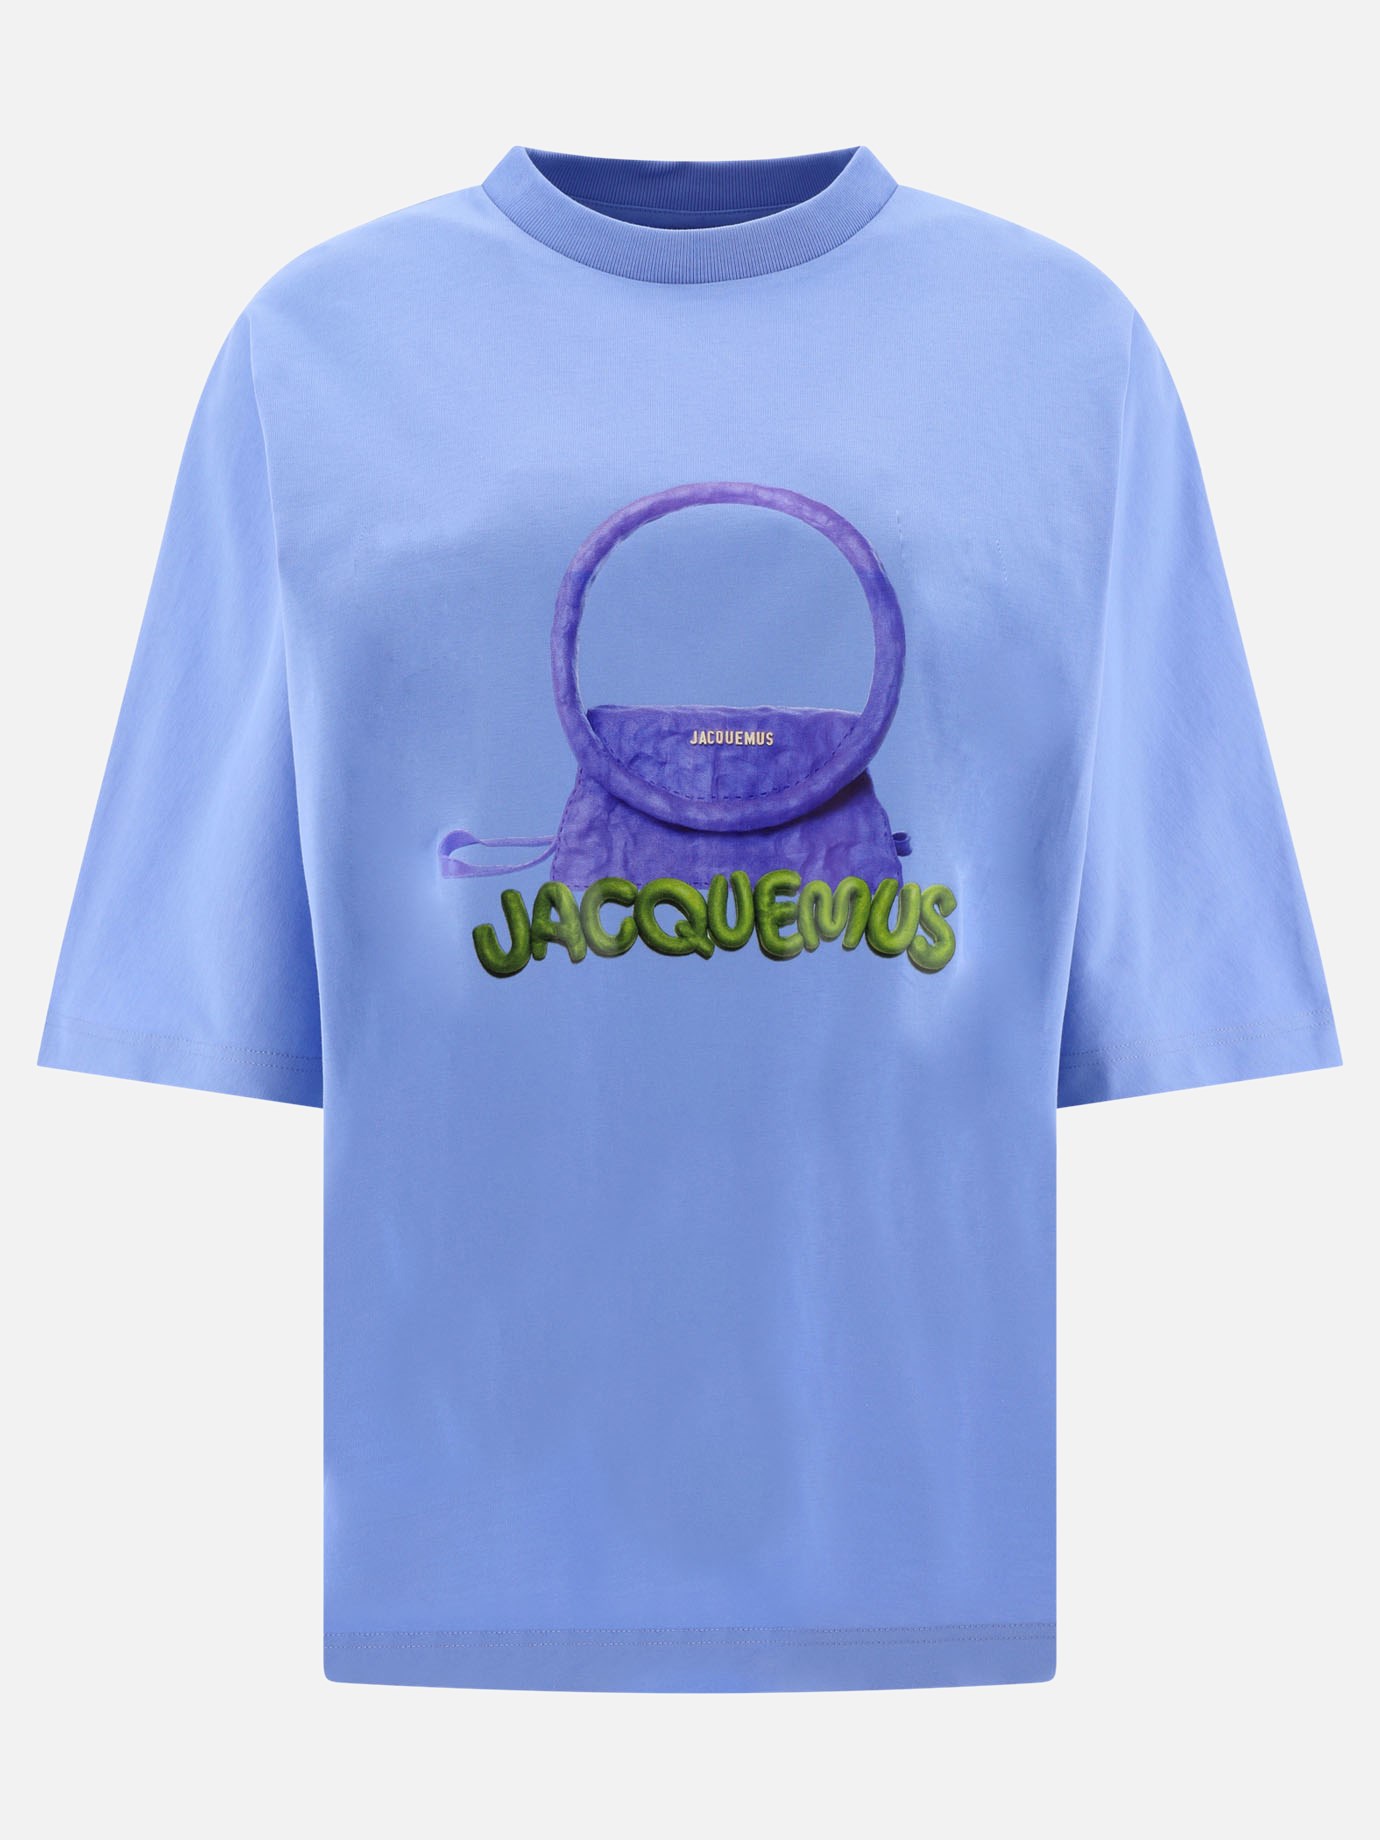  Le T-shirt Sac Rond  t-shirtby Jacquemus - 2